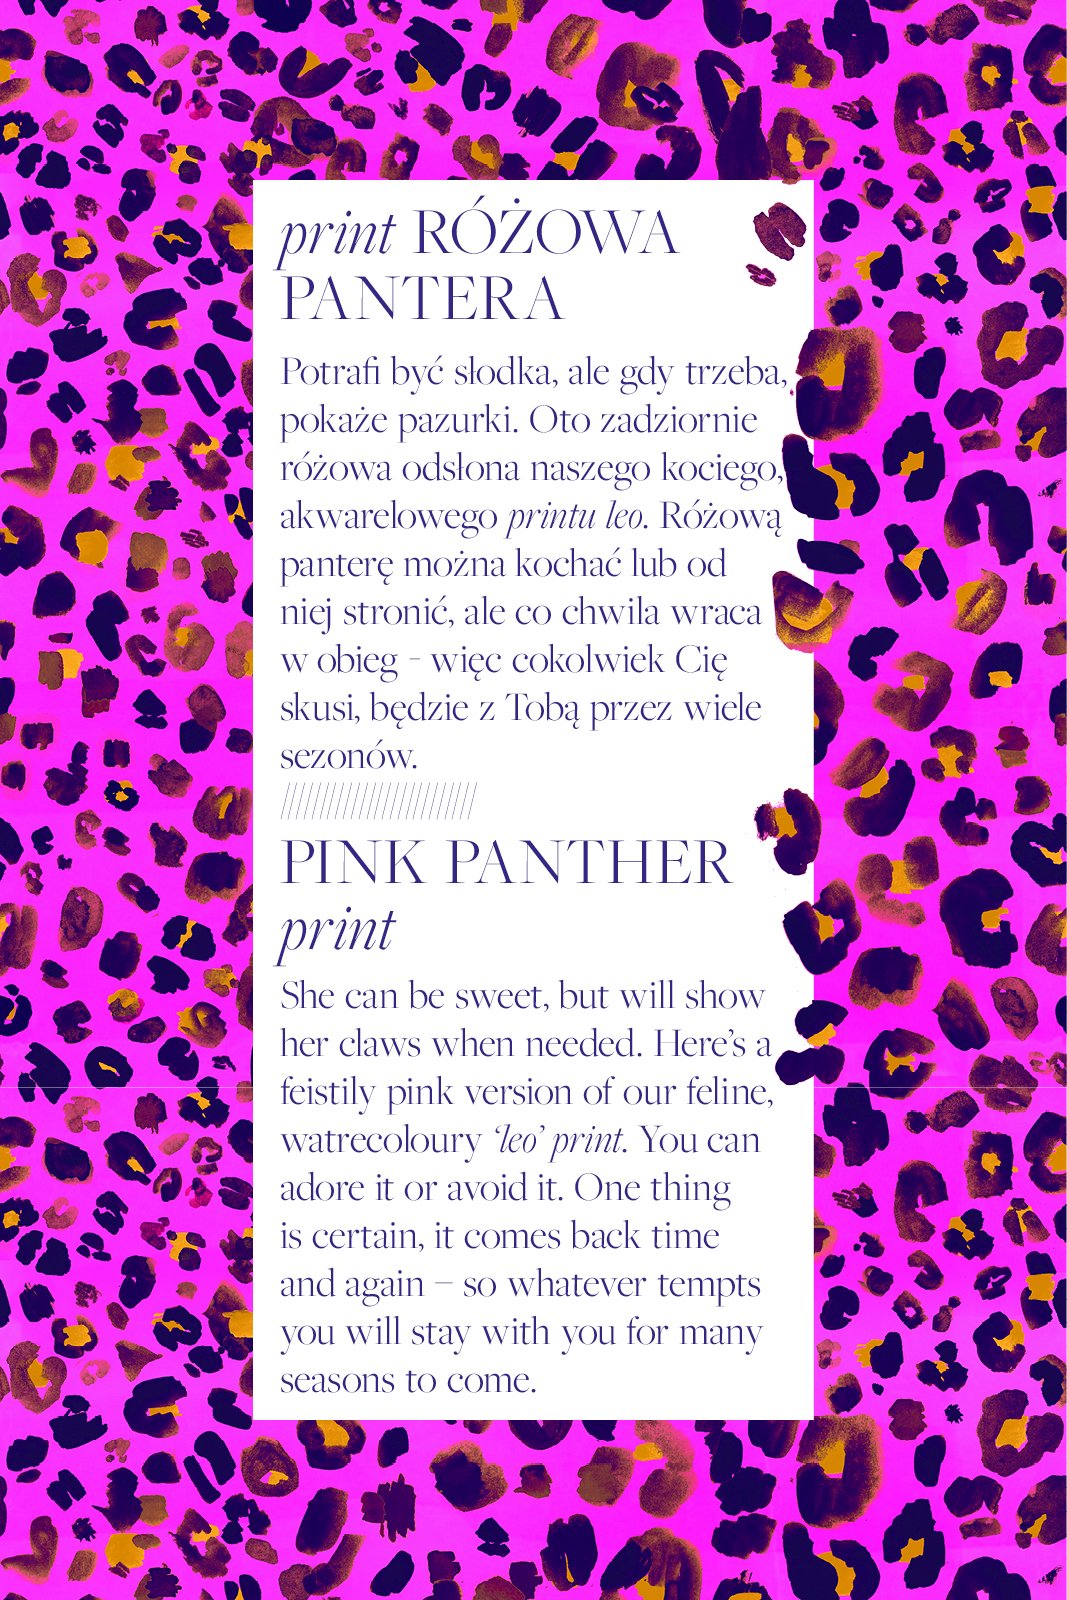 LUCY IN THE SKY print różowa pantera